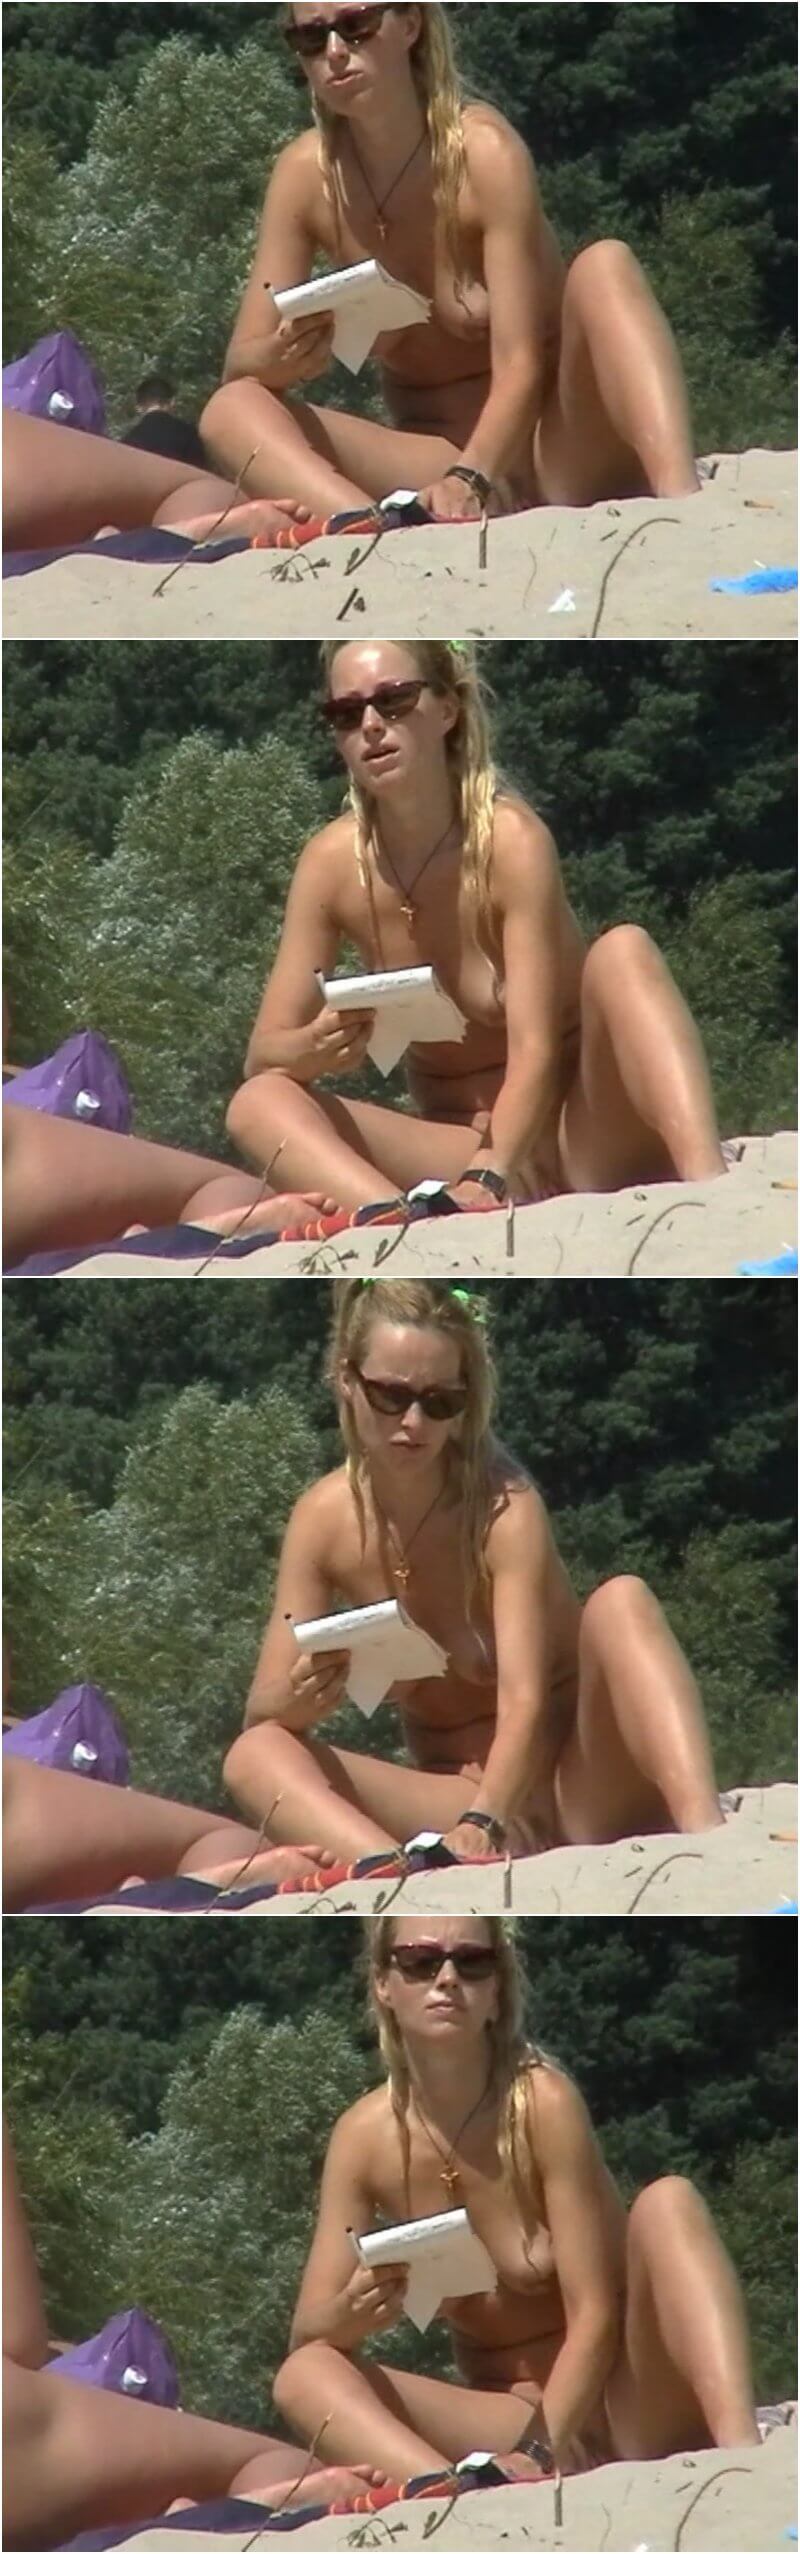 Nude beach, upskirt, voyeur, spying cams